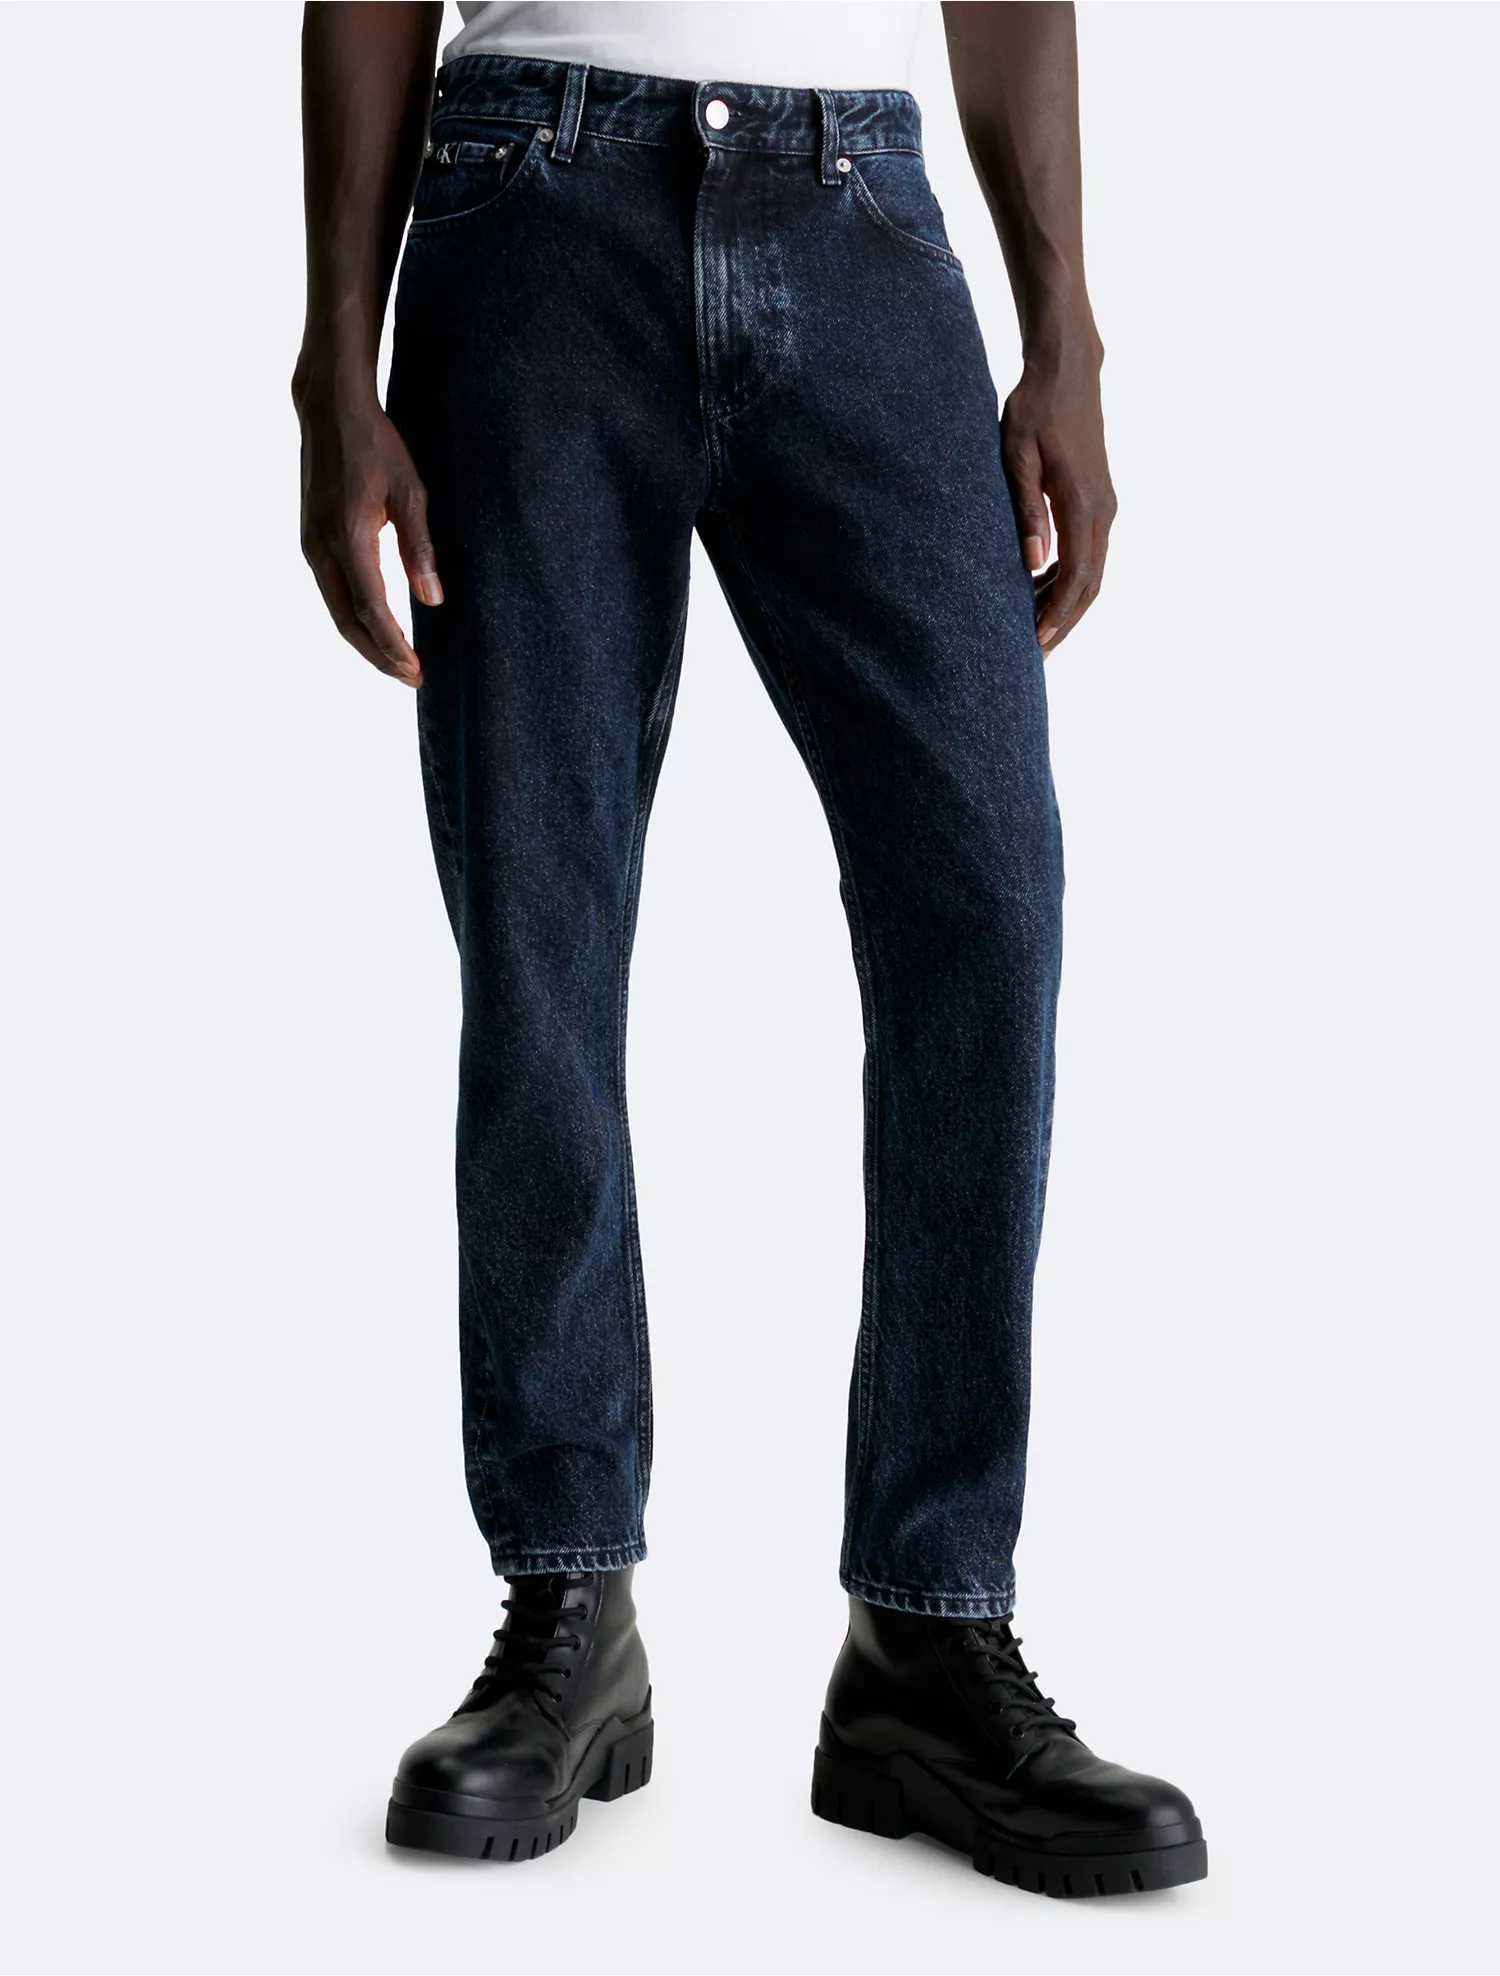 Новые джинсы calvin klein (ck relaxed fit dad jeans) с америки 34l